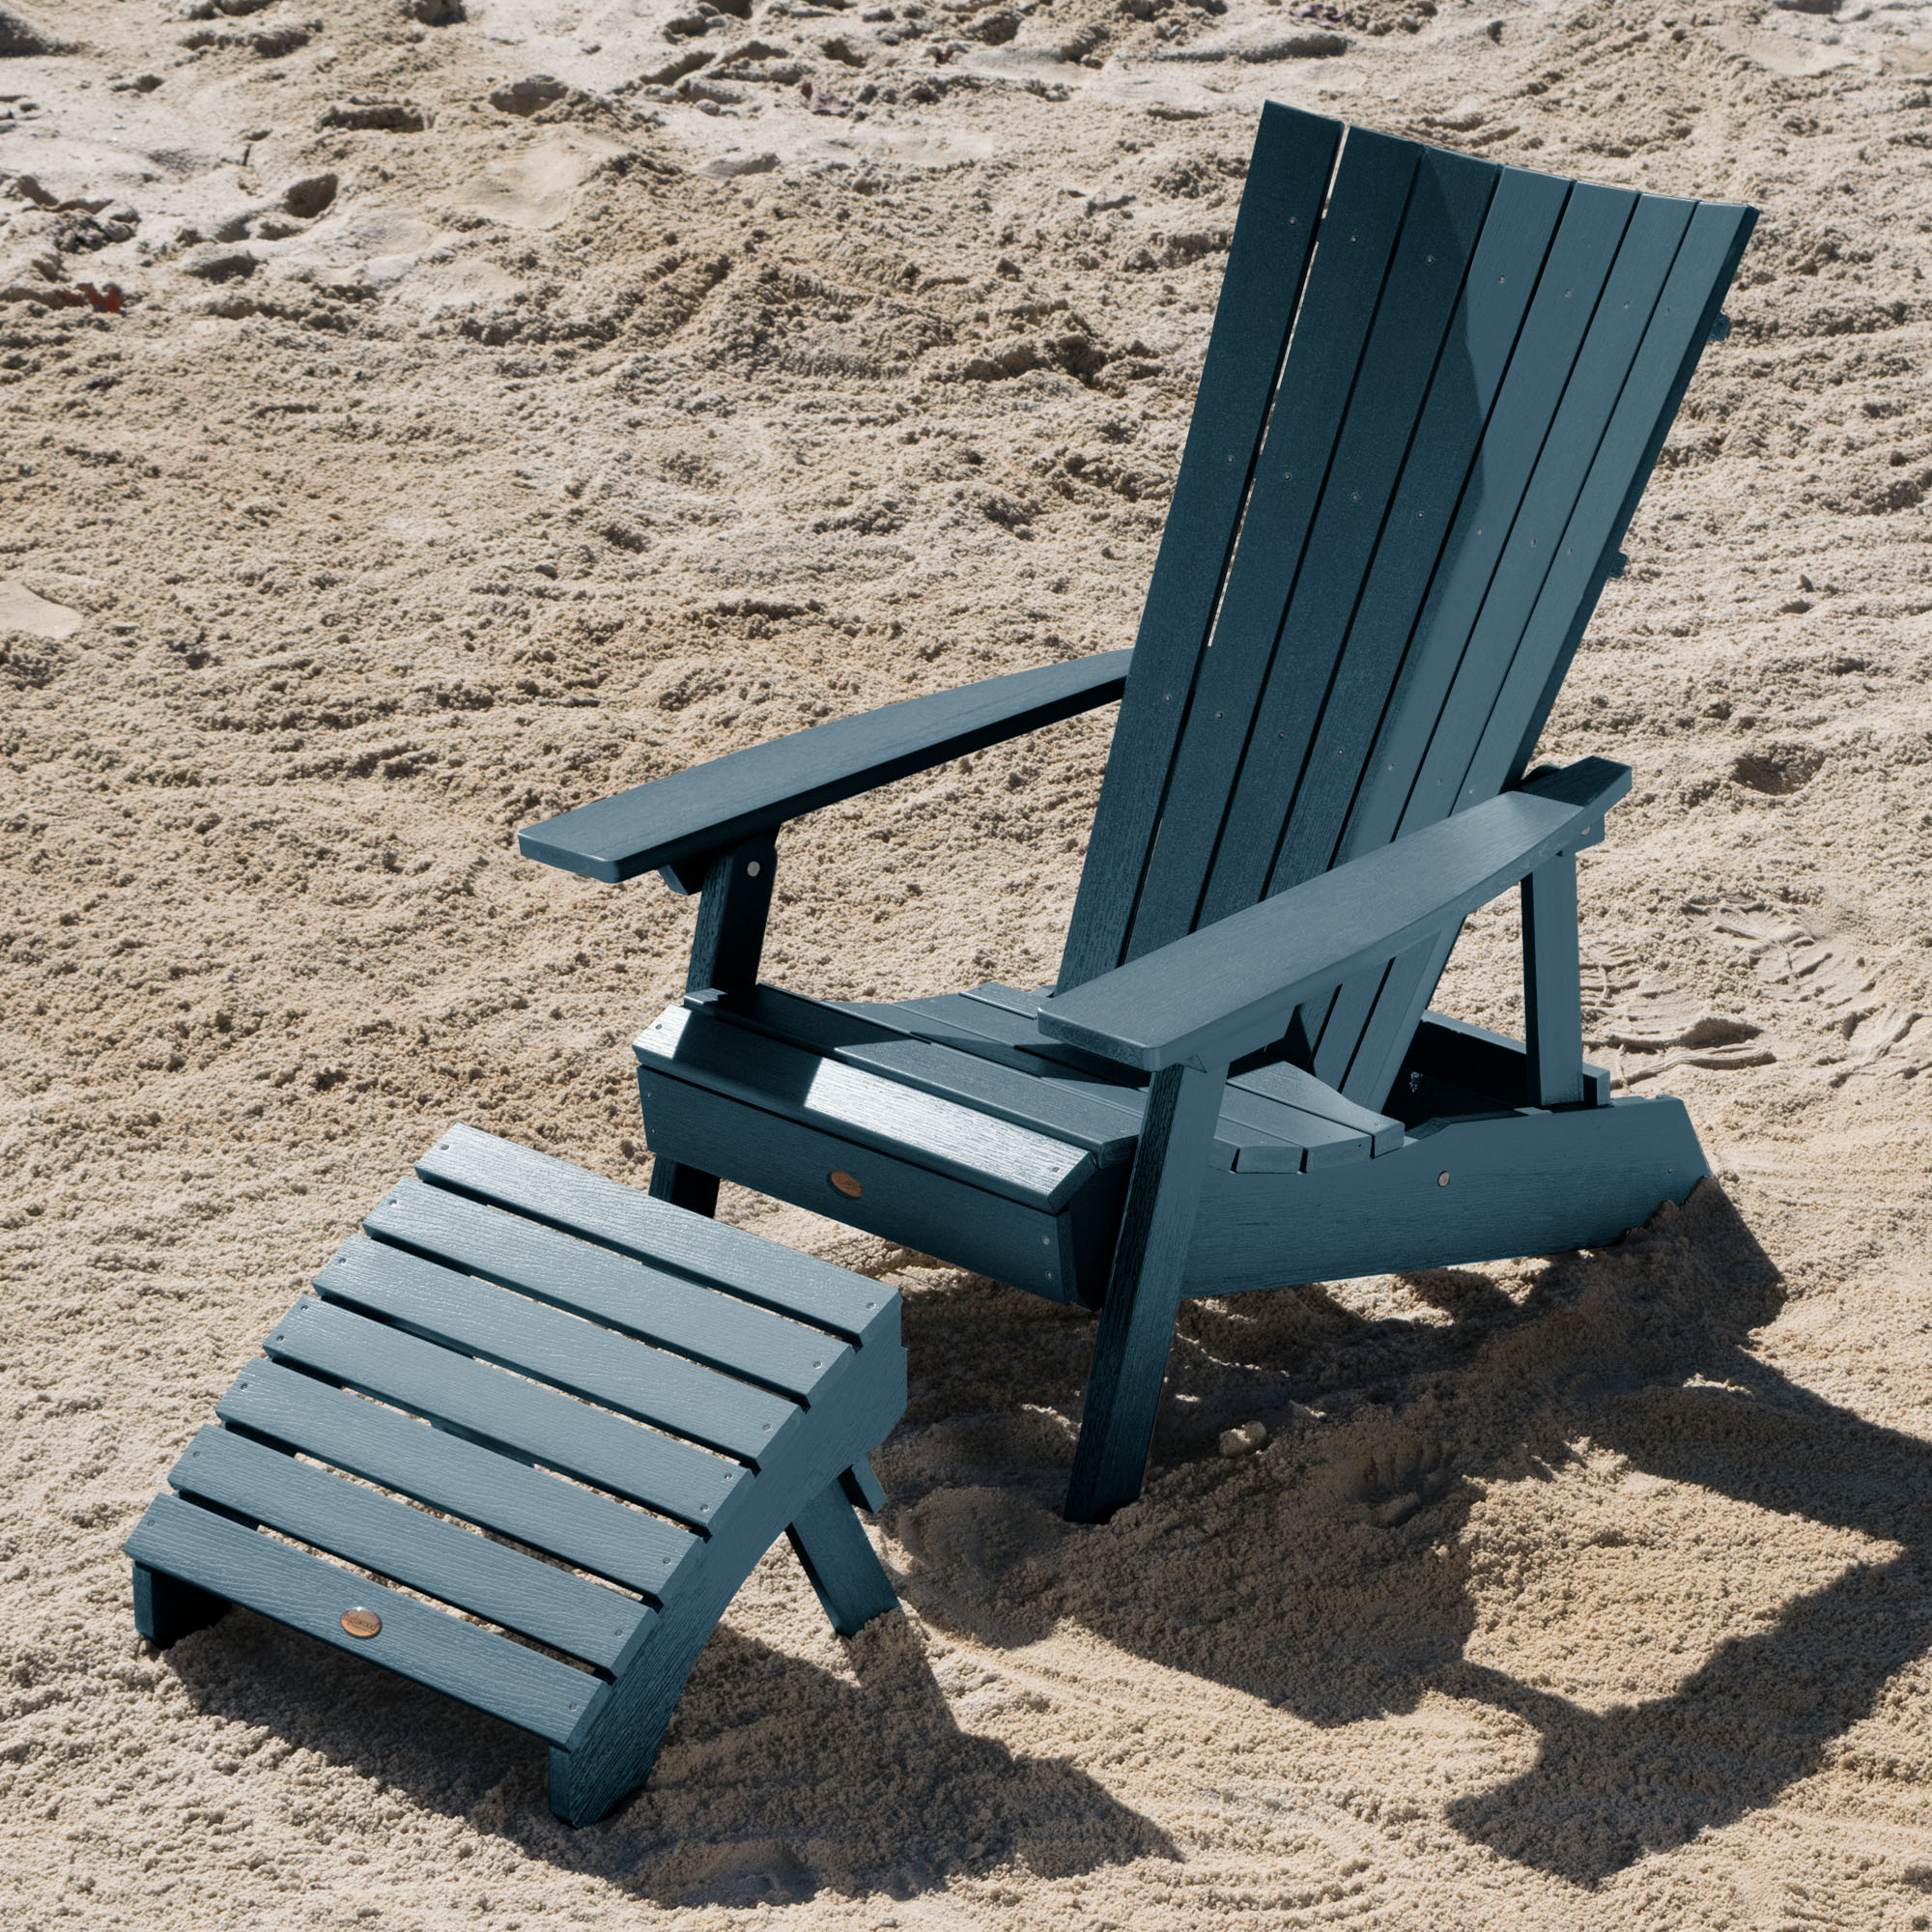 Highwood Manhattan Beach Adirondack Chair with Folding Ottoman - image 2 of 6